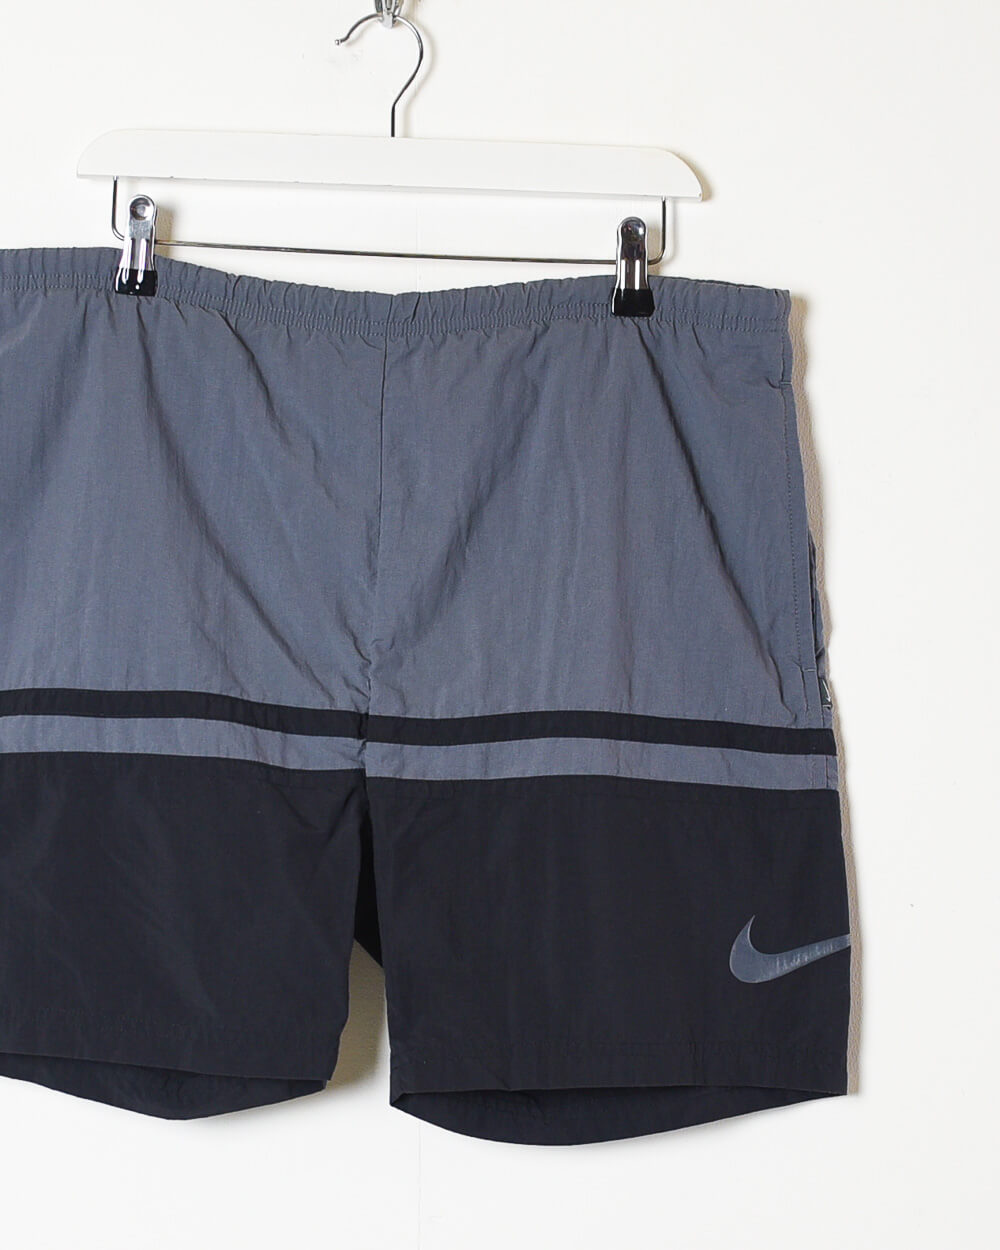 Black Nike Shorts - Small